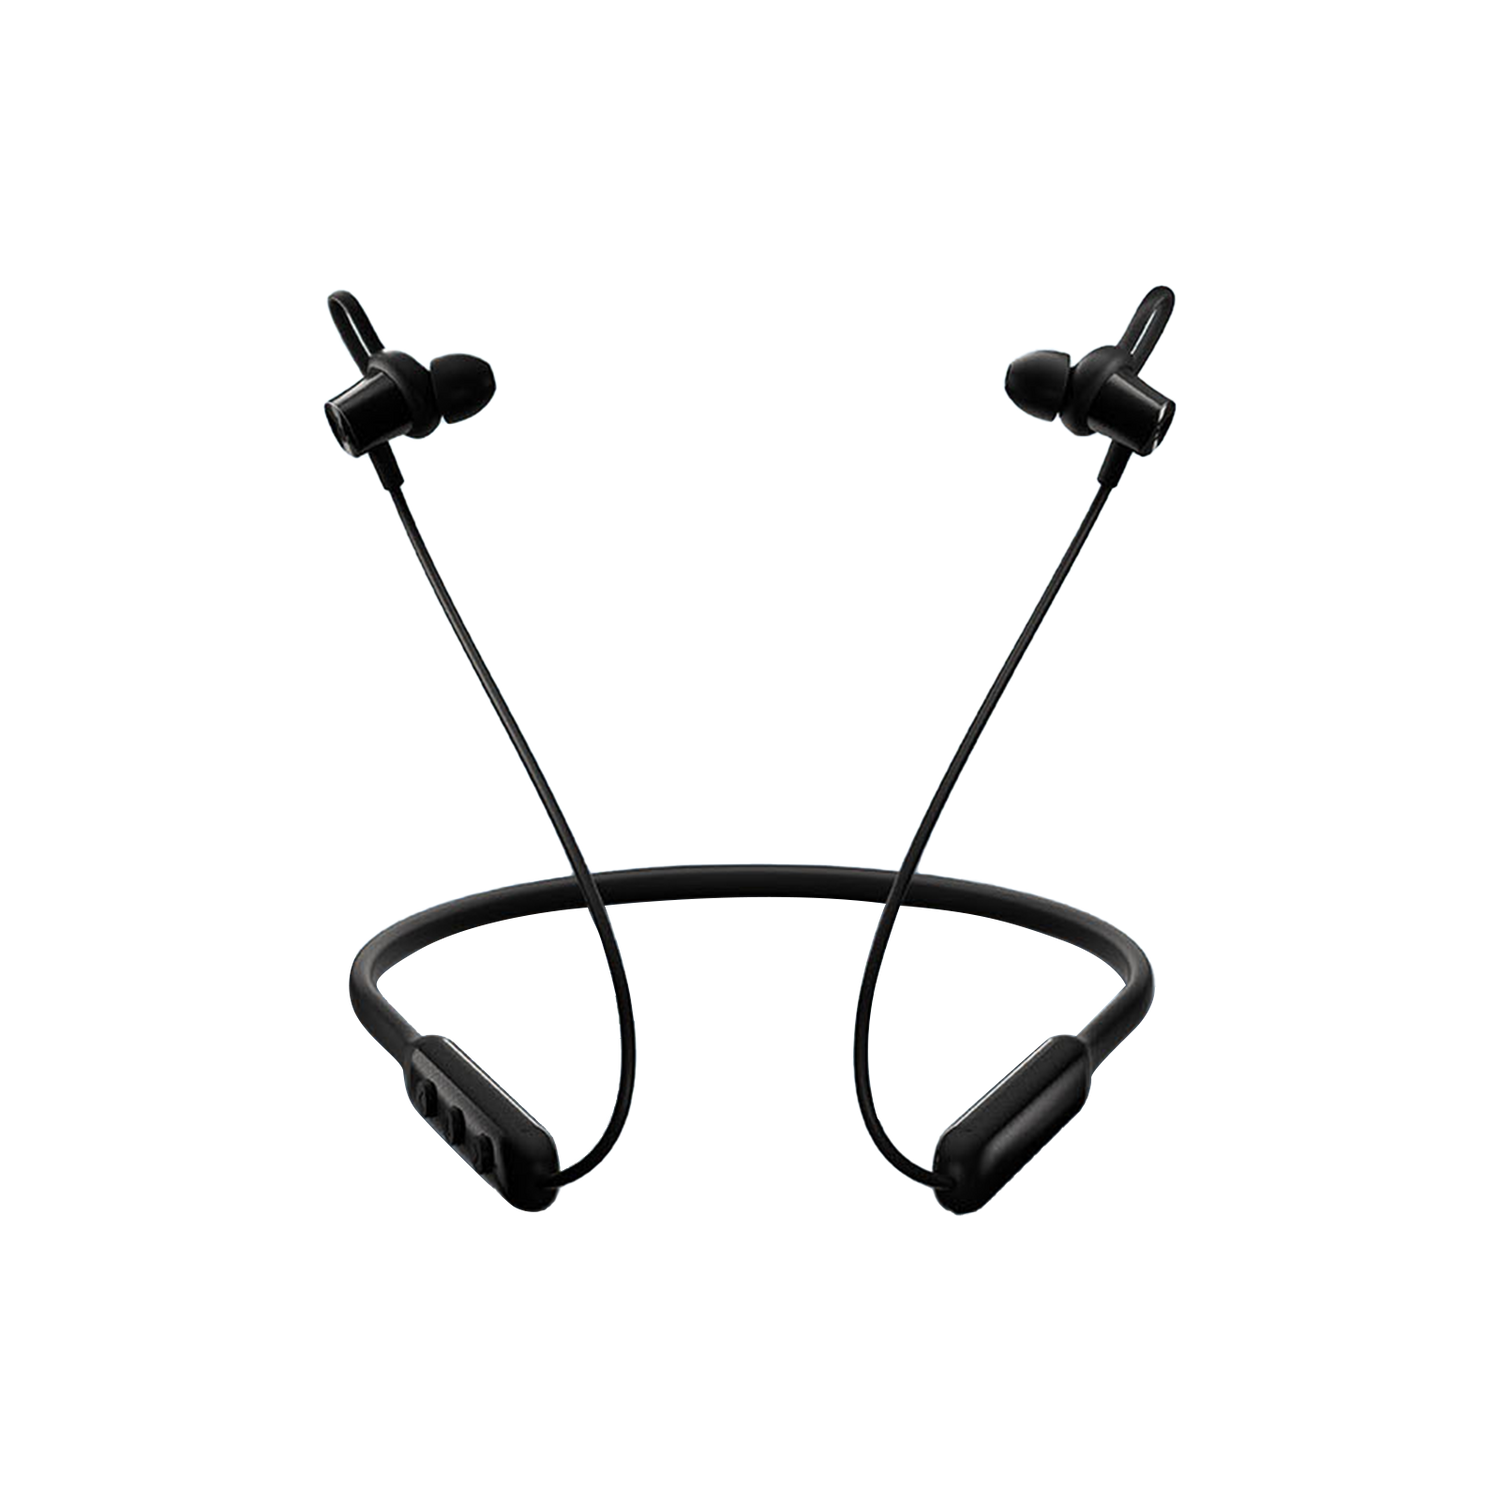 W210BT Wireless Neckband Headphones